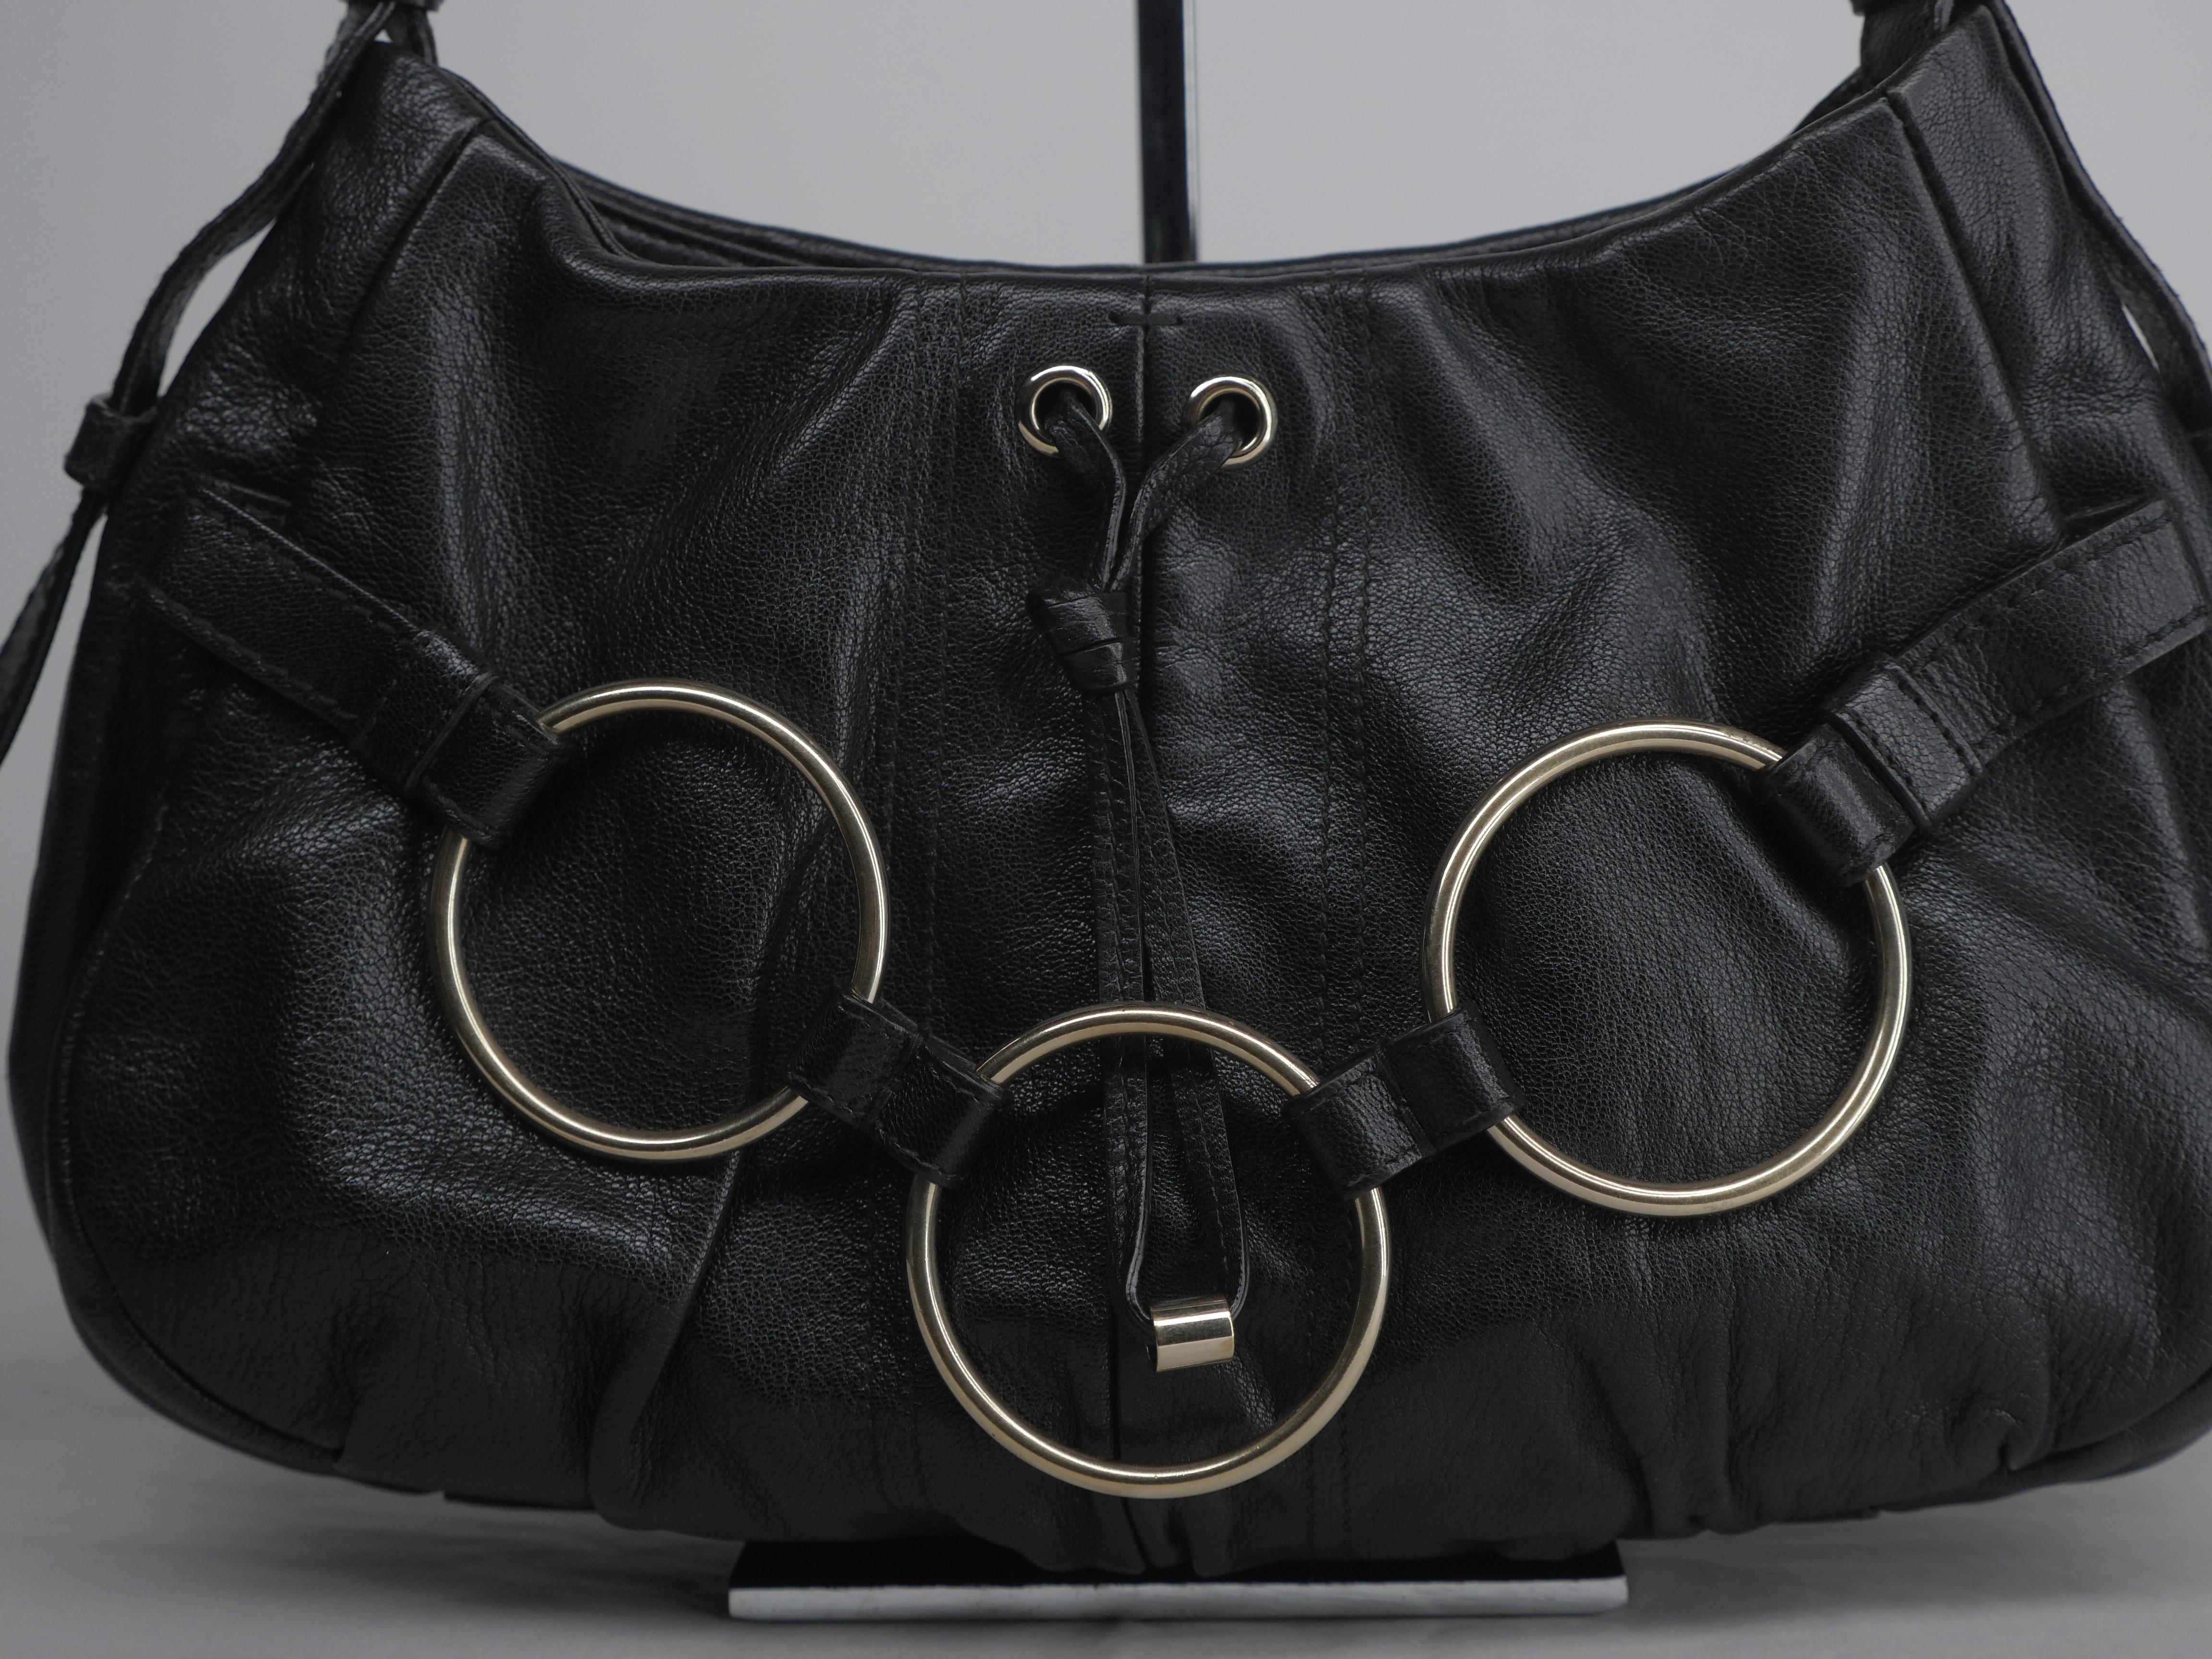 Shoulder Bag with gold circular link hardware and tassel detail. Zipper Top and adjustable strap